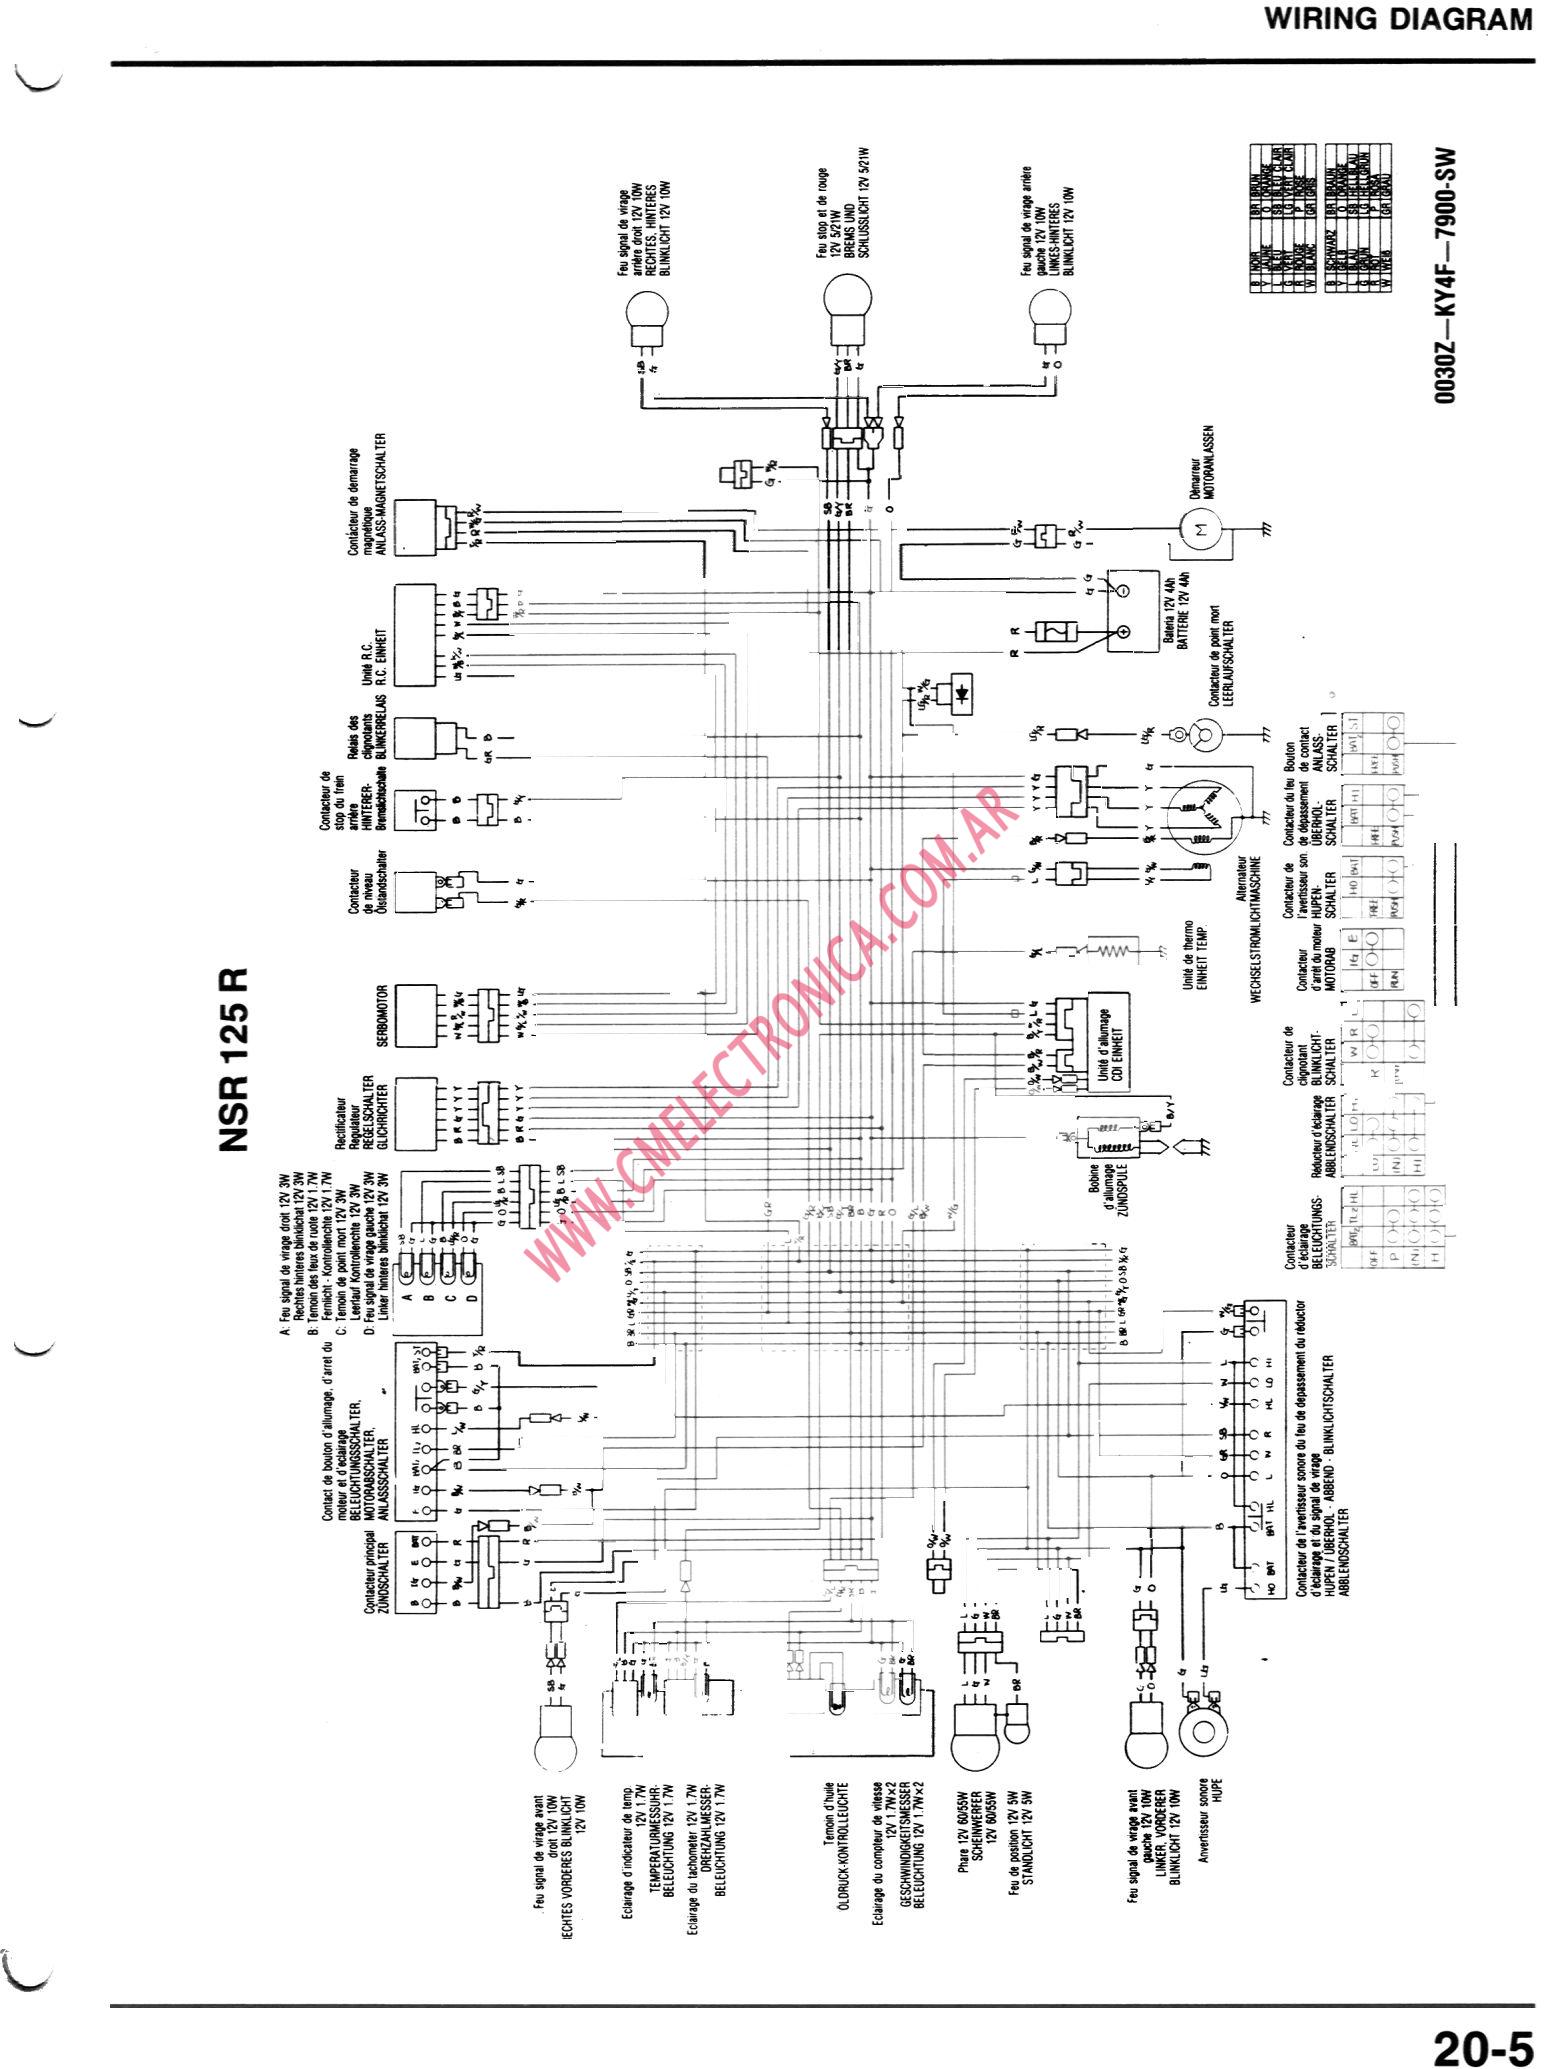 Honda nsr 125 wiring diagram #6